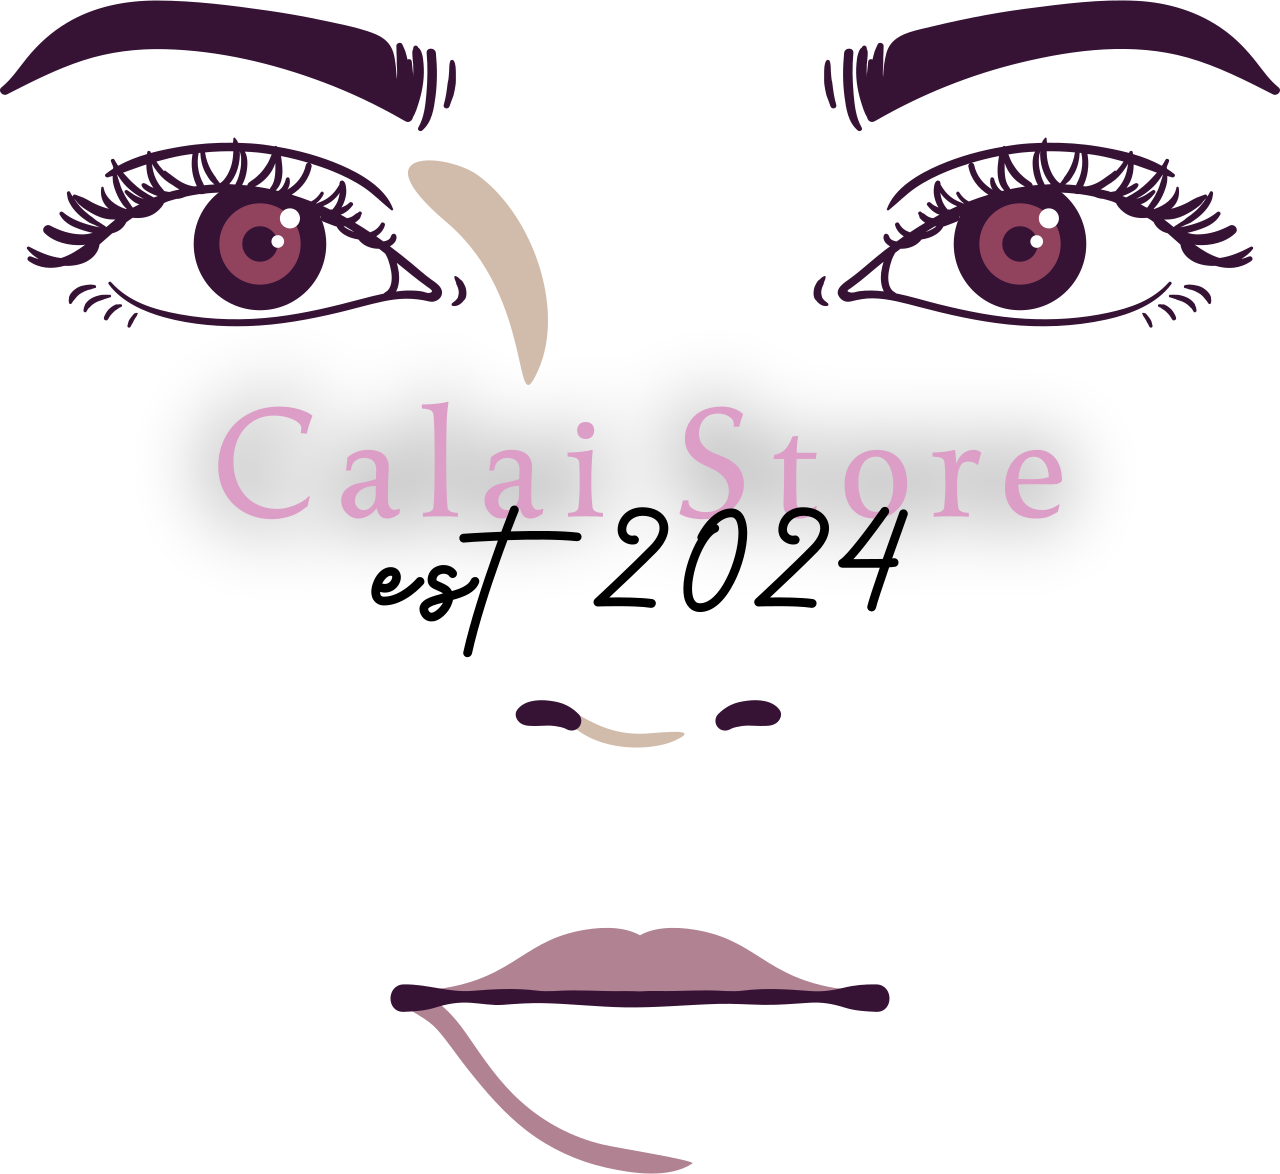 Calai Store's logo